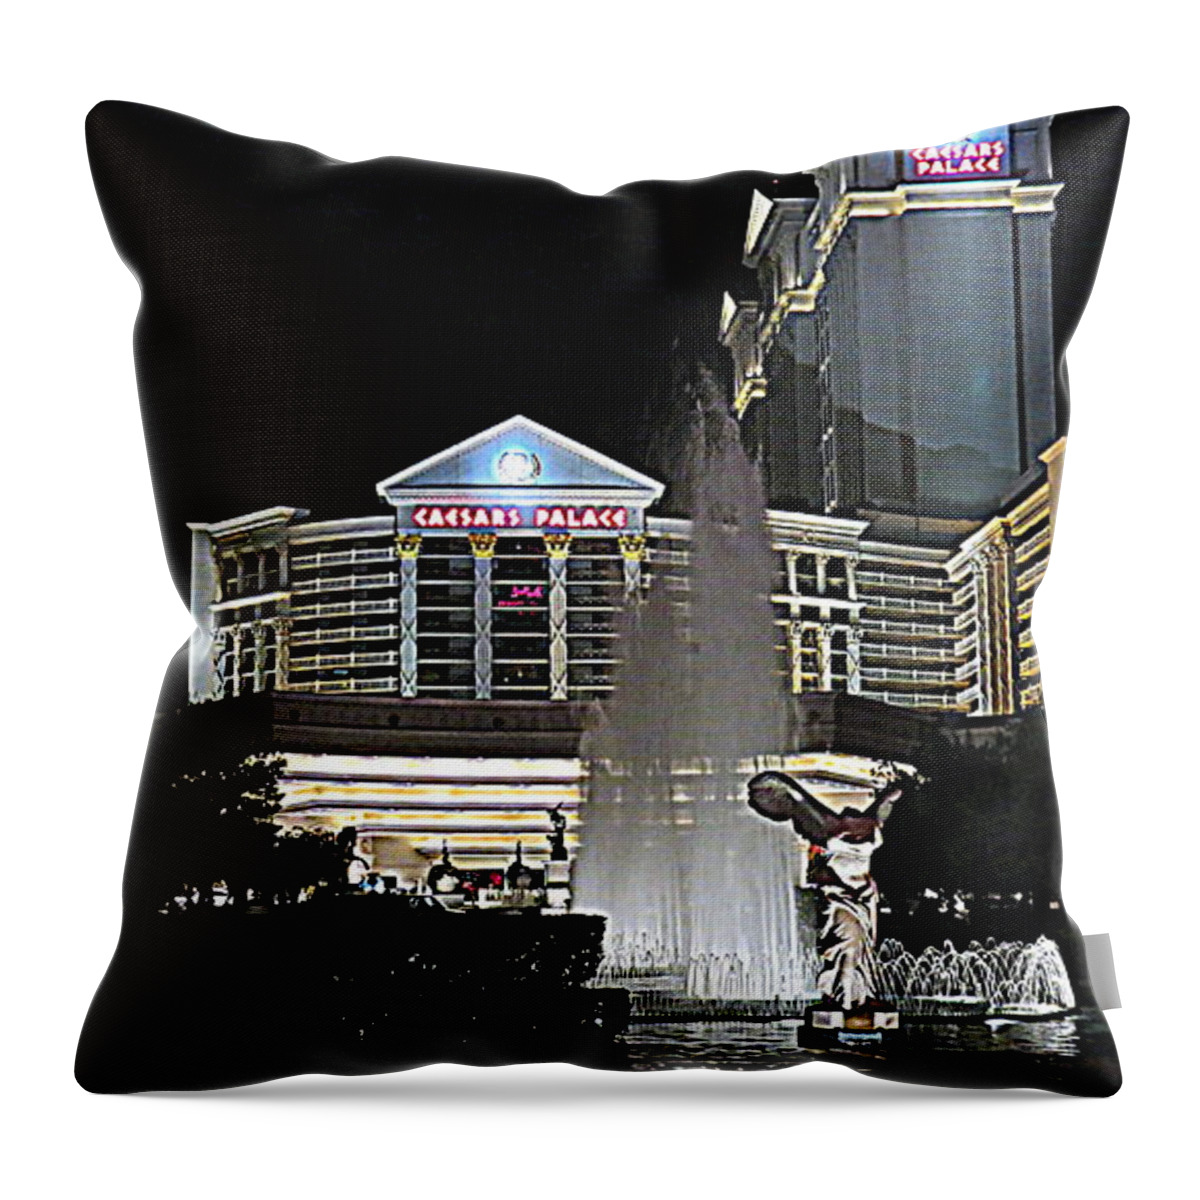 Night-shot Throw Pillow featuring the photograph Caesars Palace by Kay Novy